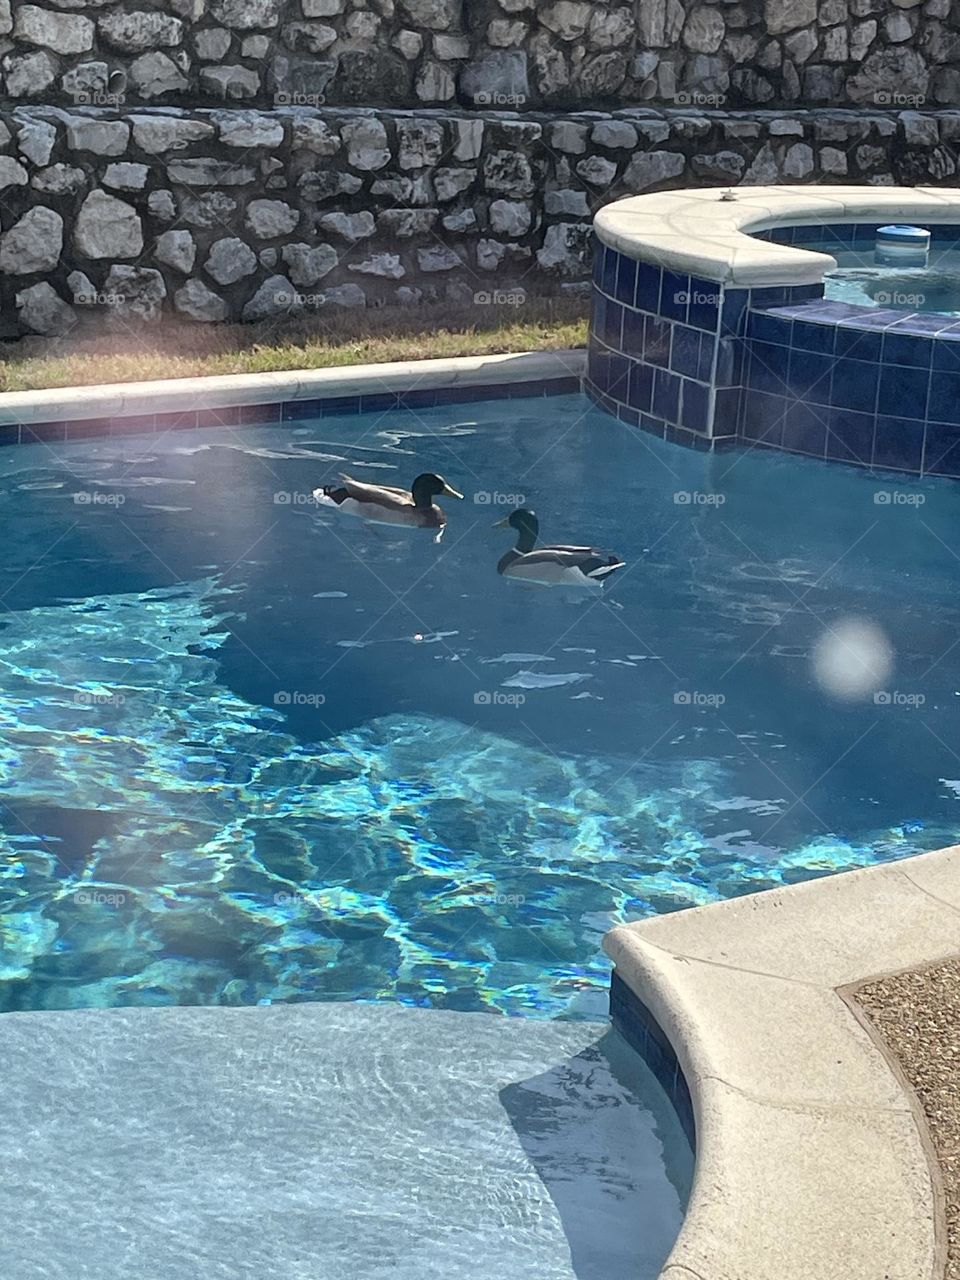 Ducks in the pool